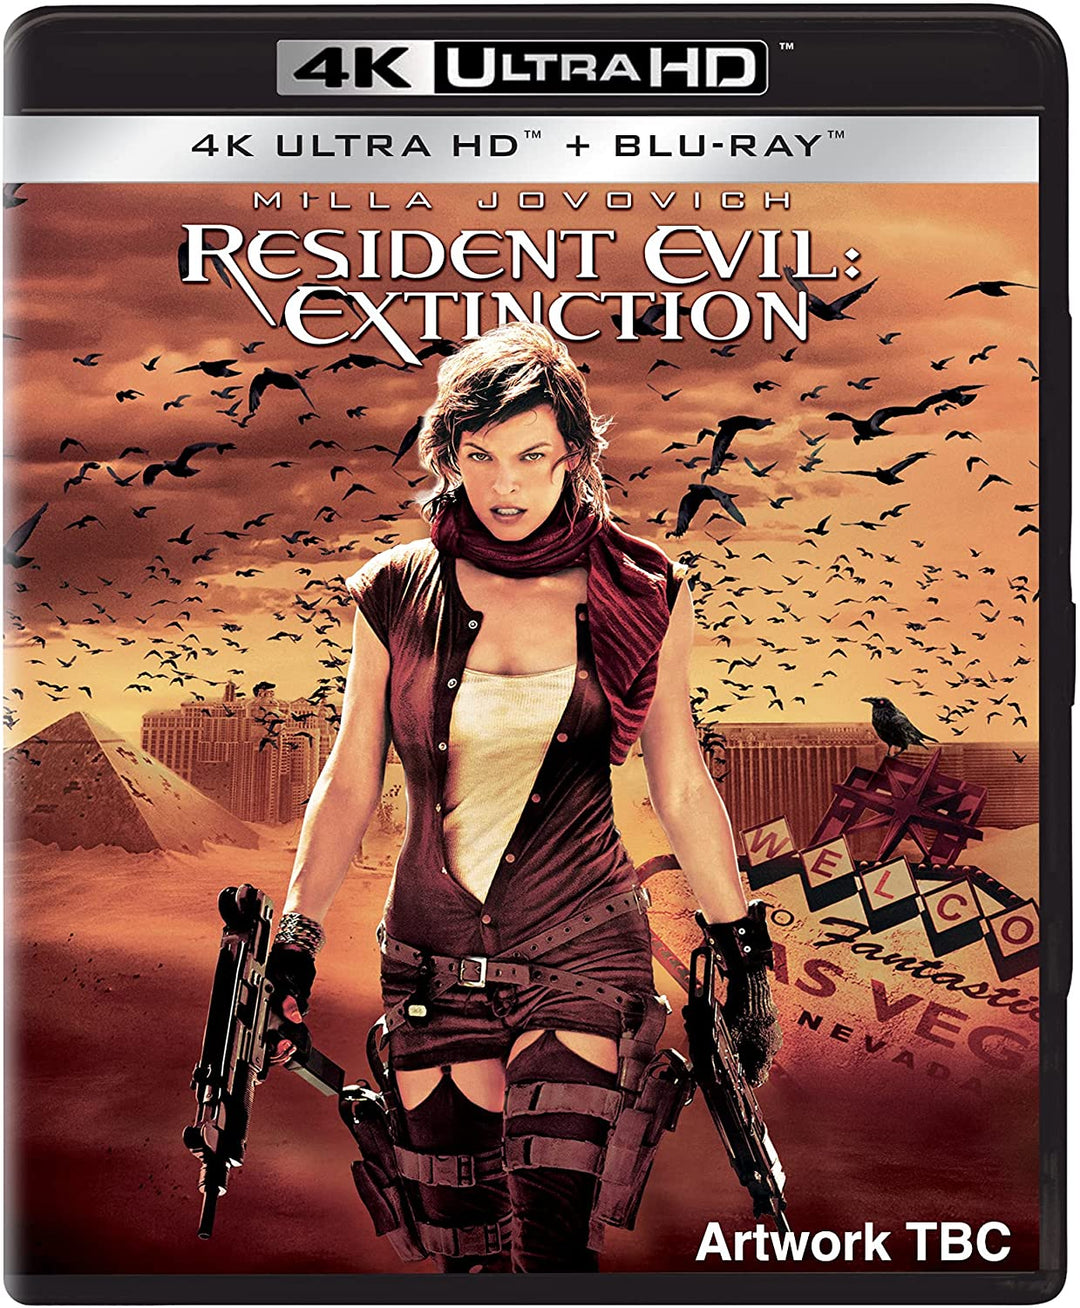 Resident Evil: Extinction (2007) (2 Discs - UHD & BD) -  Action/Horror [Blu-ray]